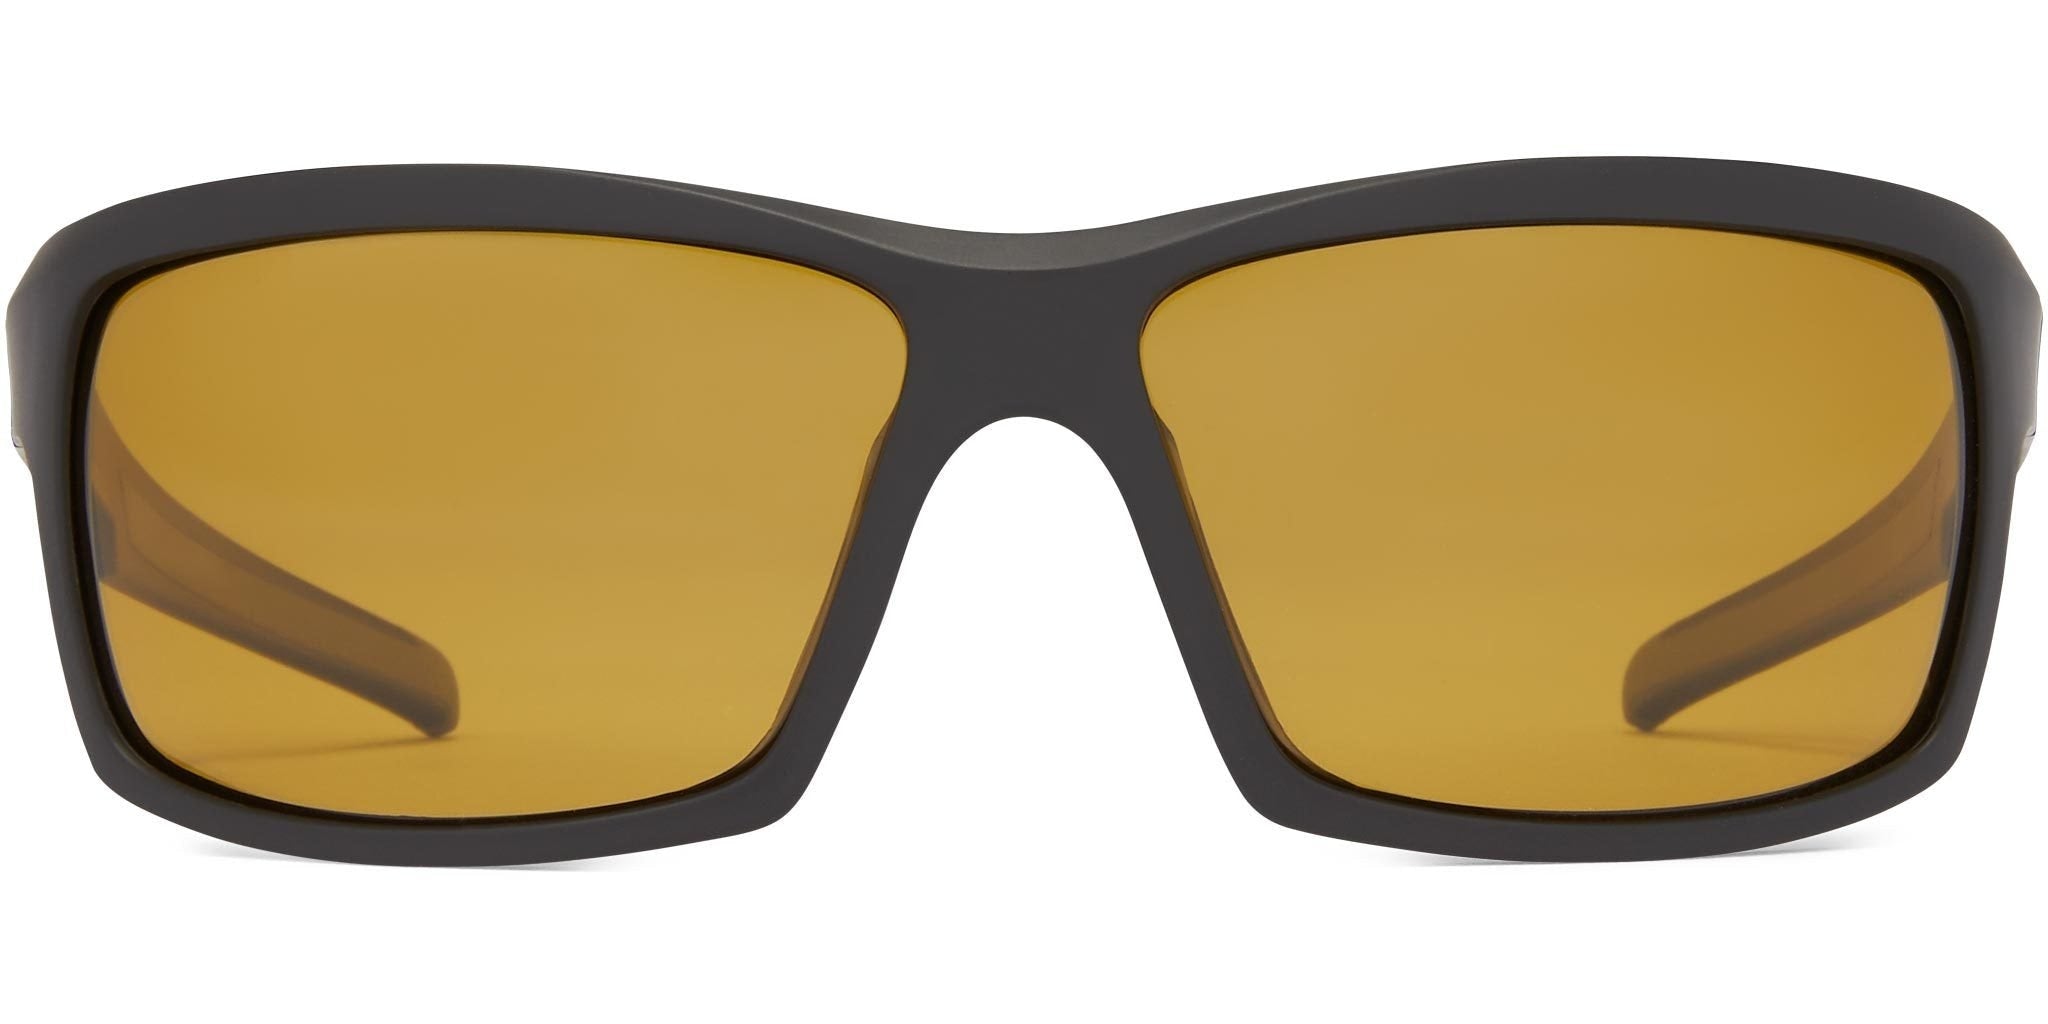 Fisherman Eyewear Marsh Polarized Sunglasses Black/Amber